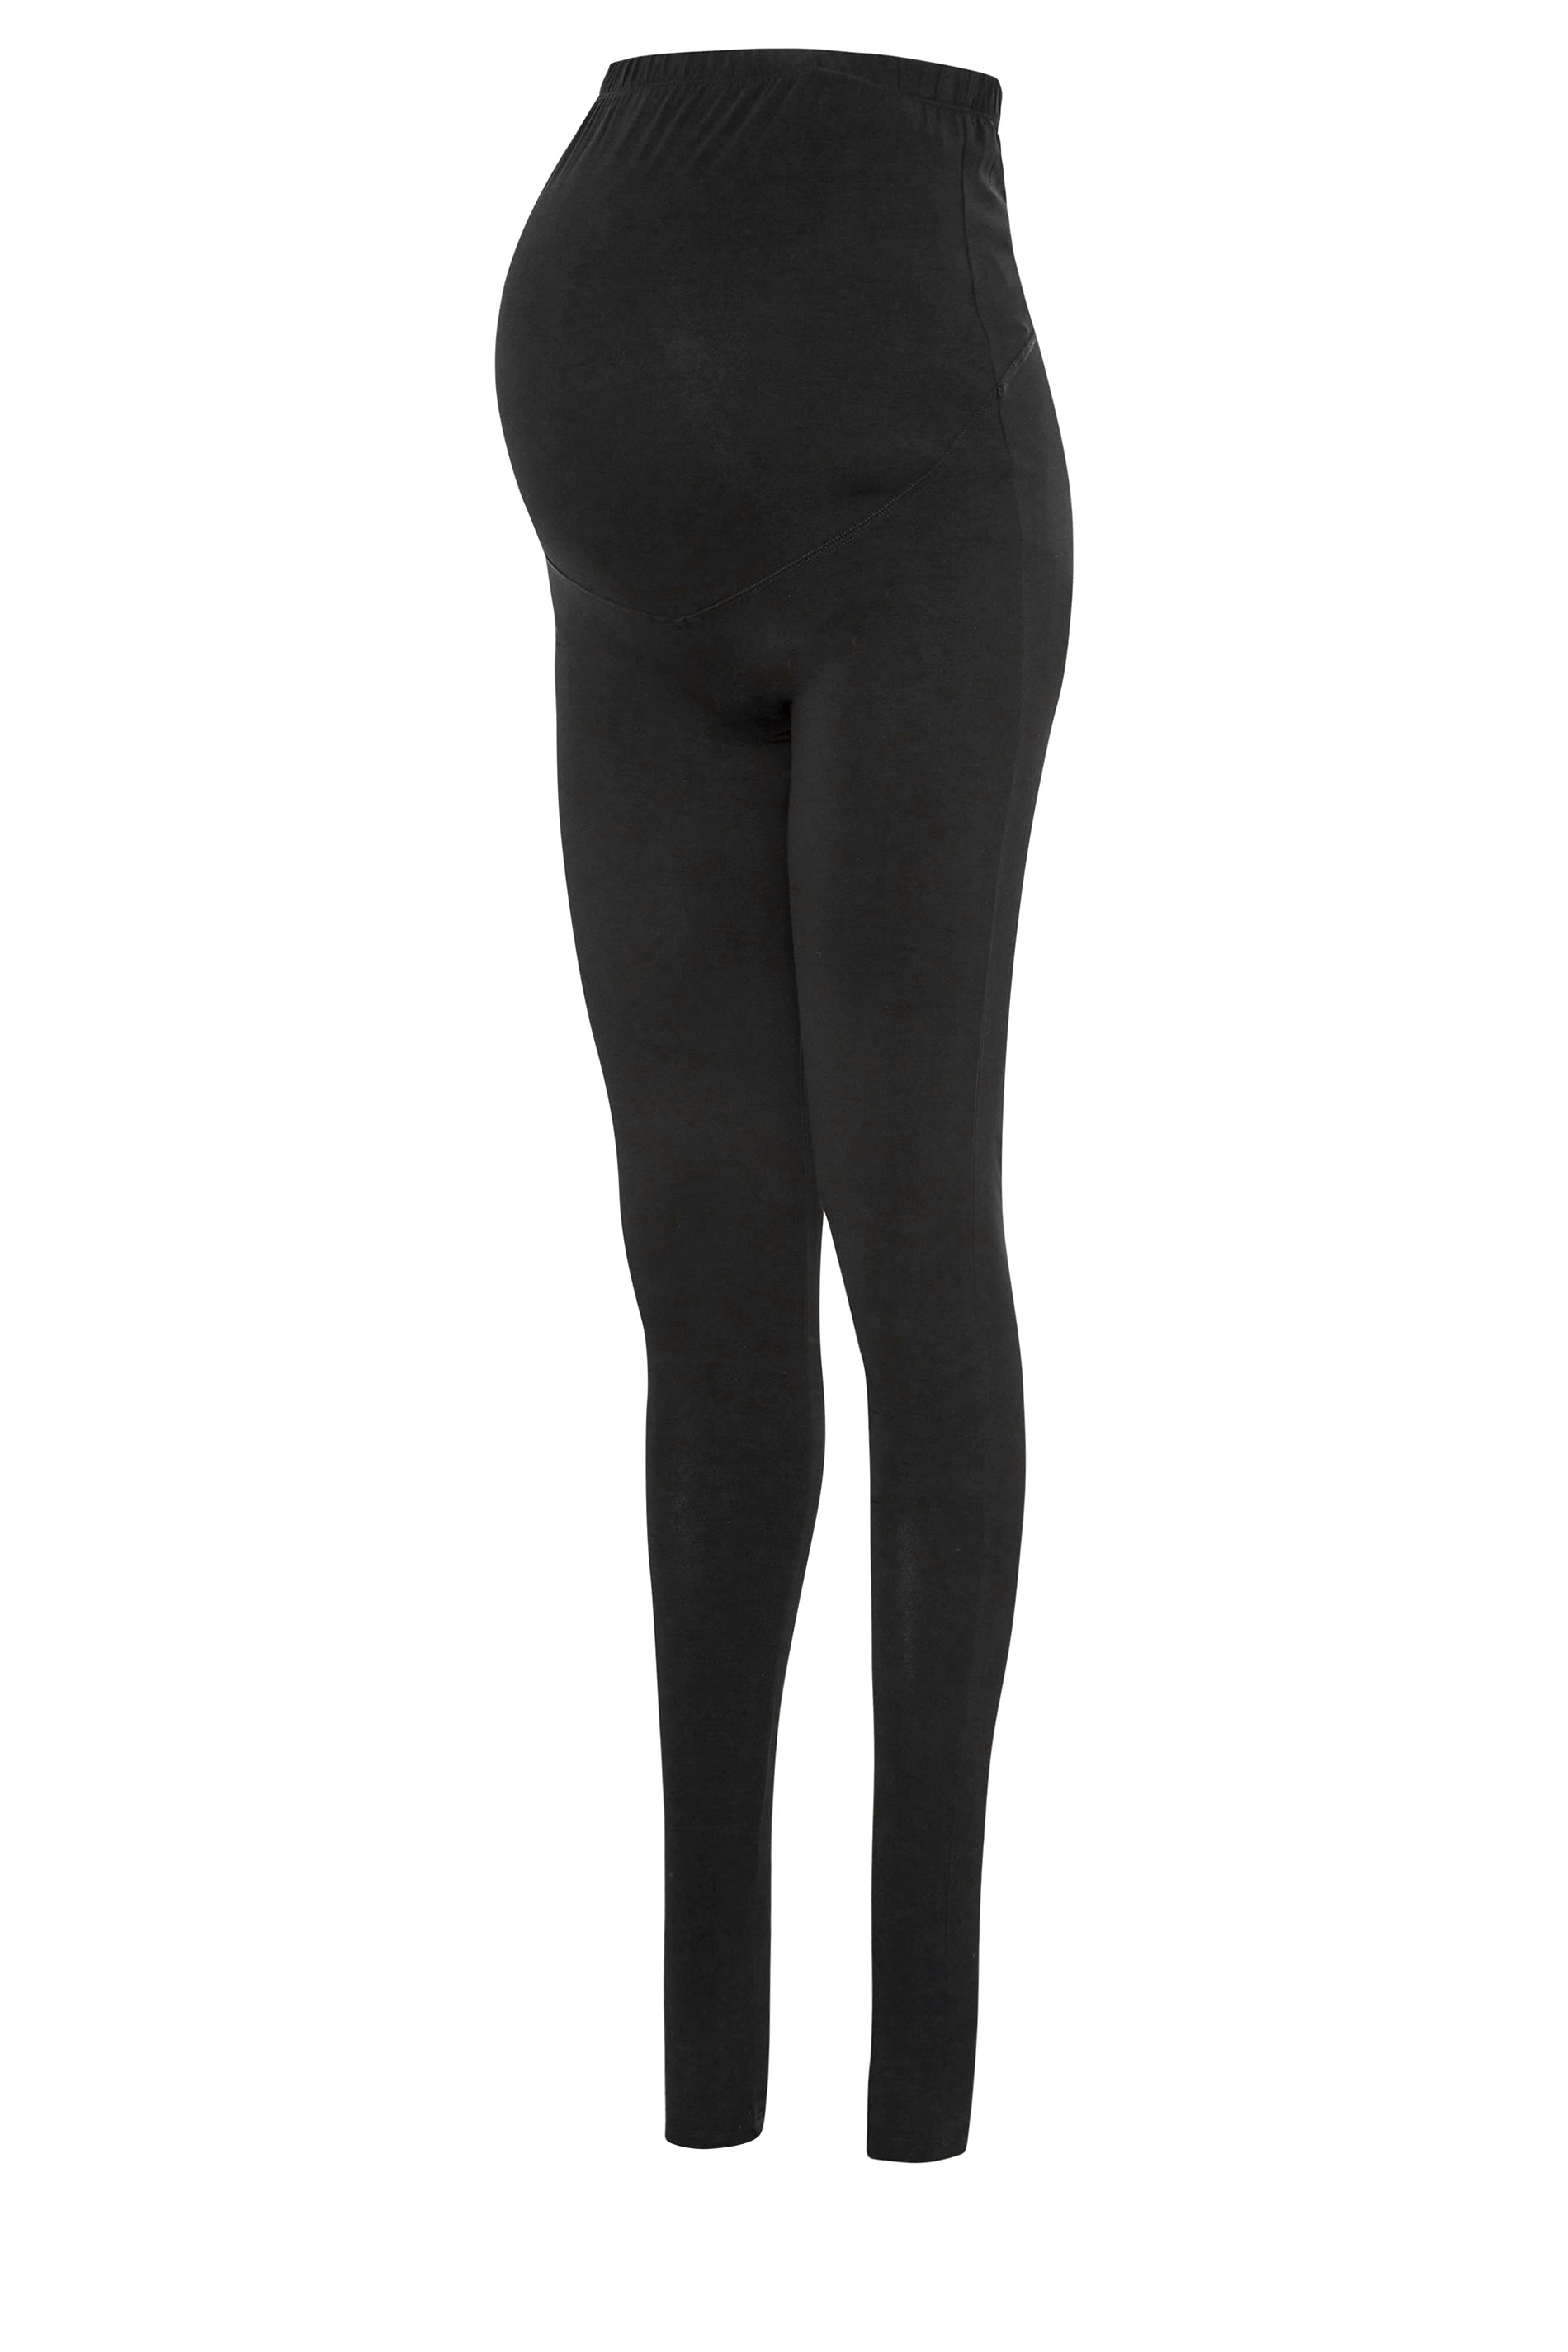 LTS Tall Women's Maternity Black Cotton Stretch Leggings | Long Tall Sally 2